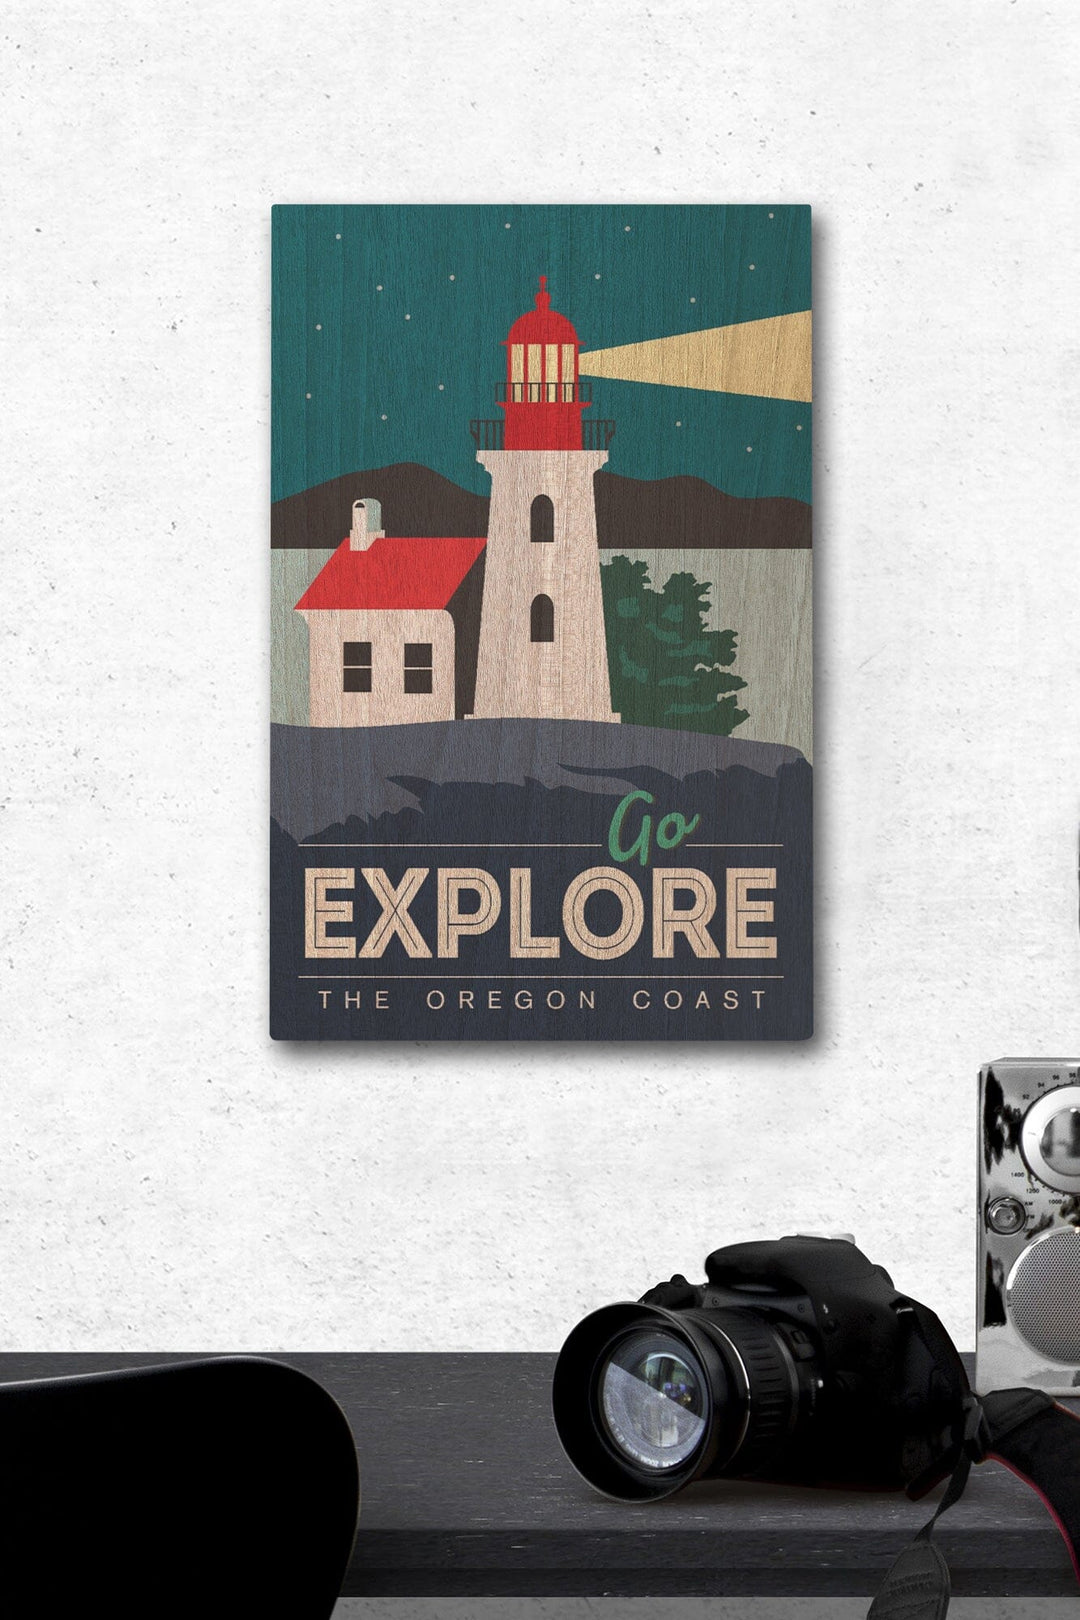 Oregon Coast, Go Explore (Lighthouse), Lantern Press Artwork, Wood Signs and Postcards Wood Lantern Press 12 x 18 Wood Gallery Print 